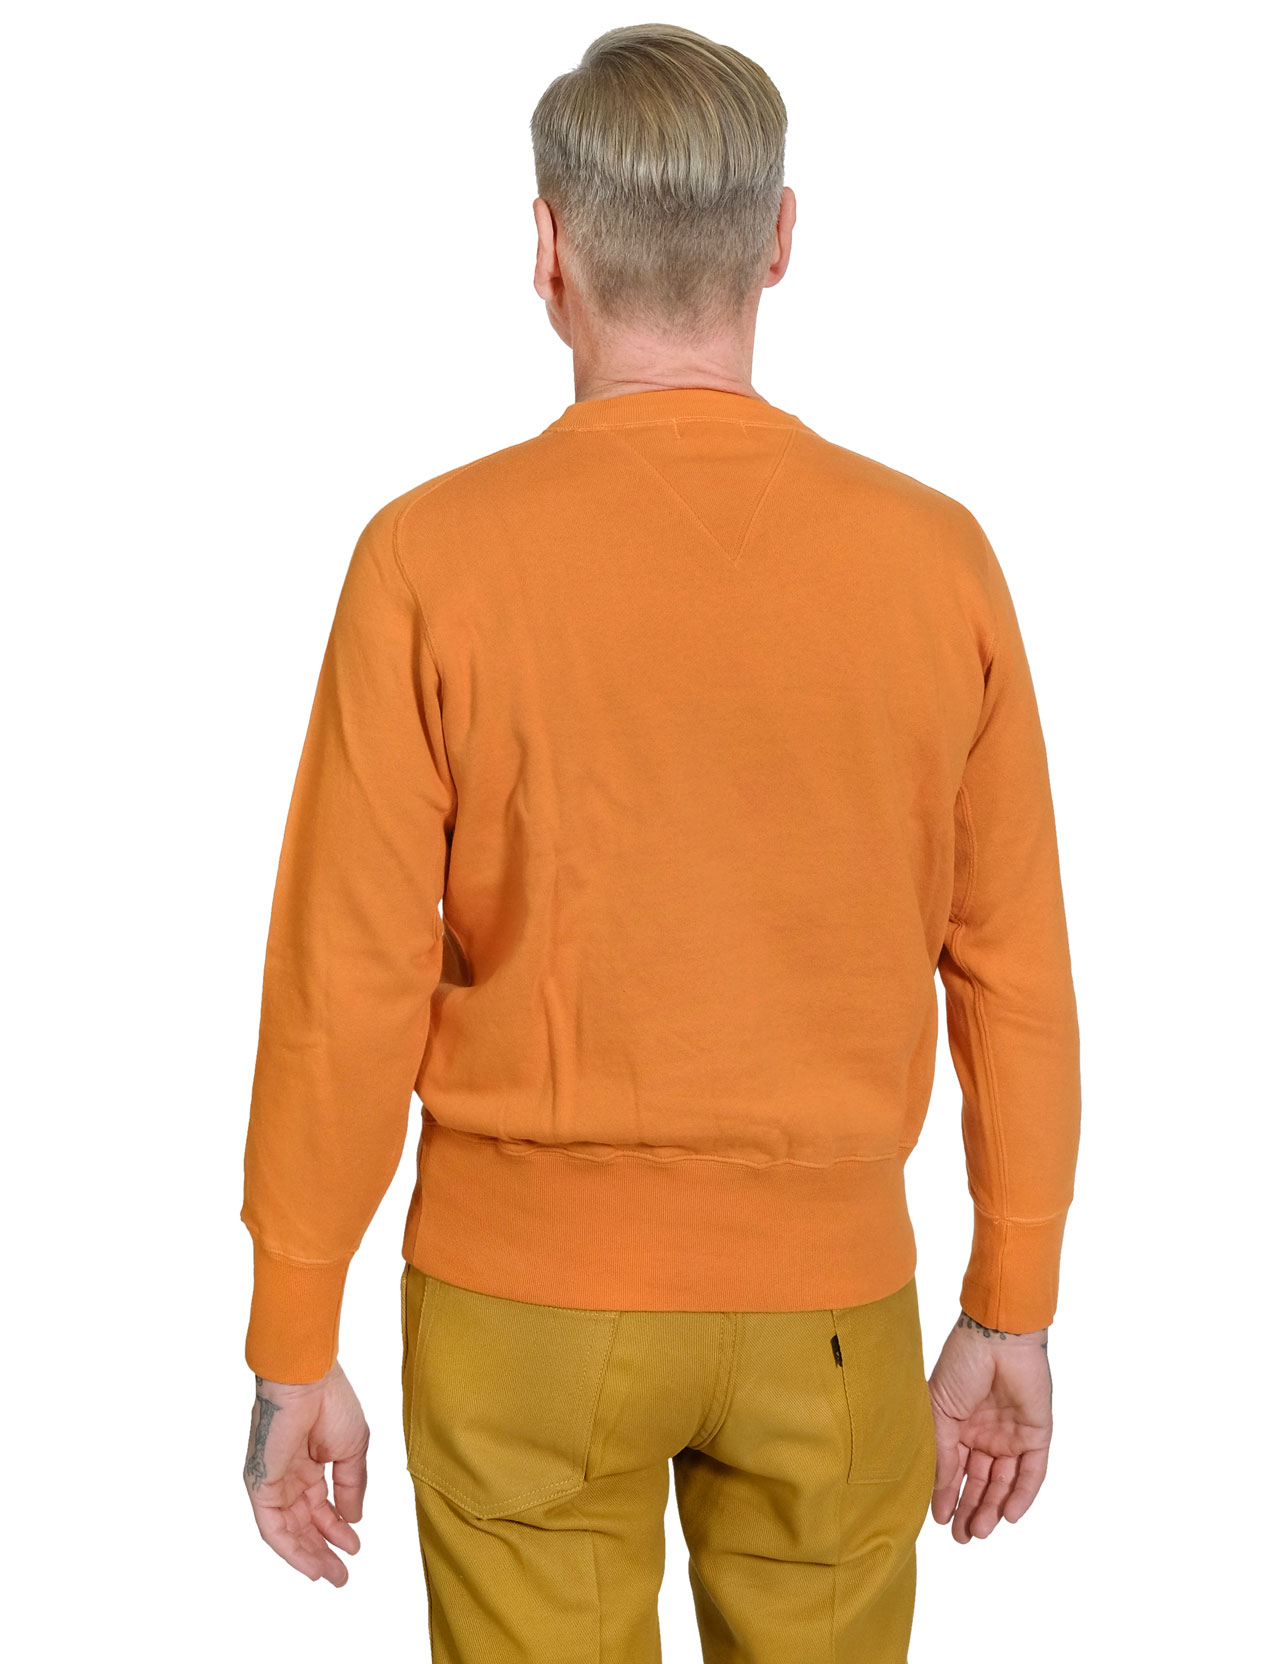 Levis Vintage Clothing - Bay Meadows Sweatshirt - Russet Orange